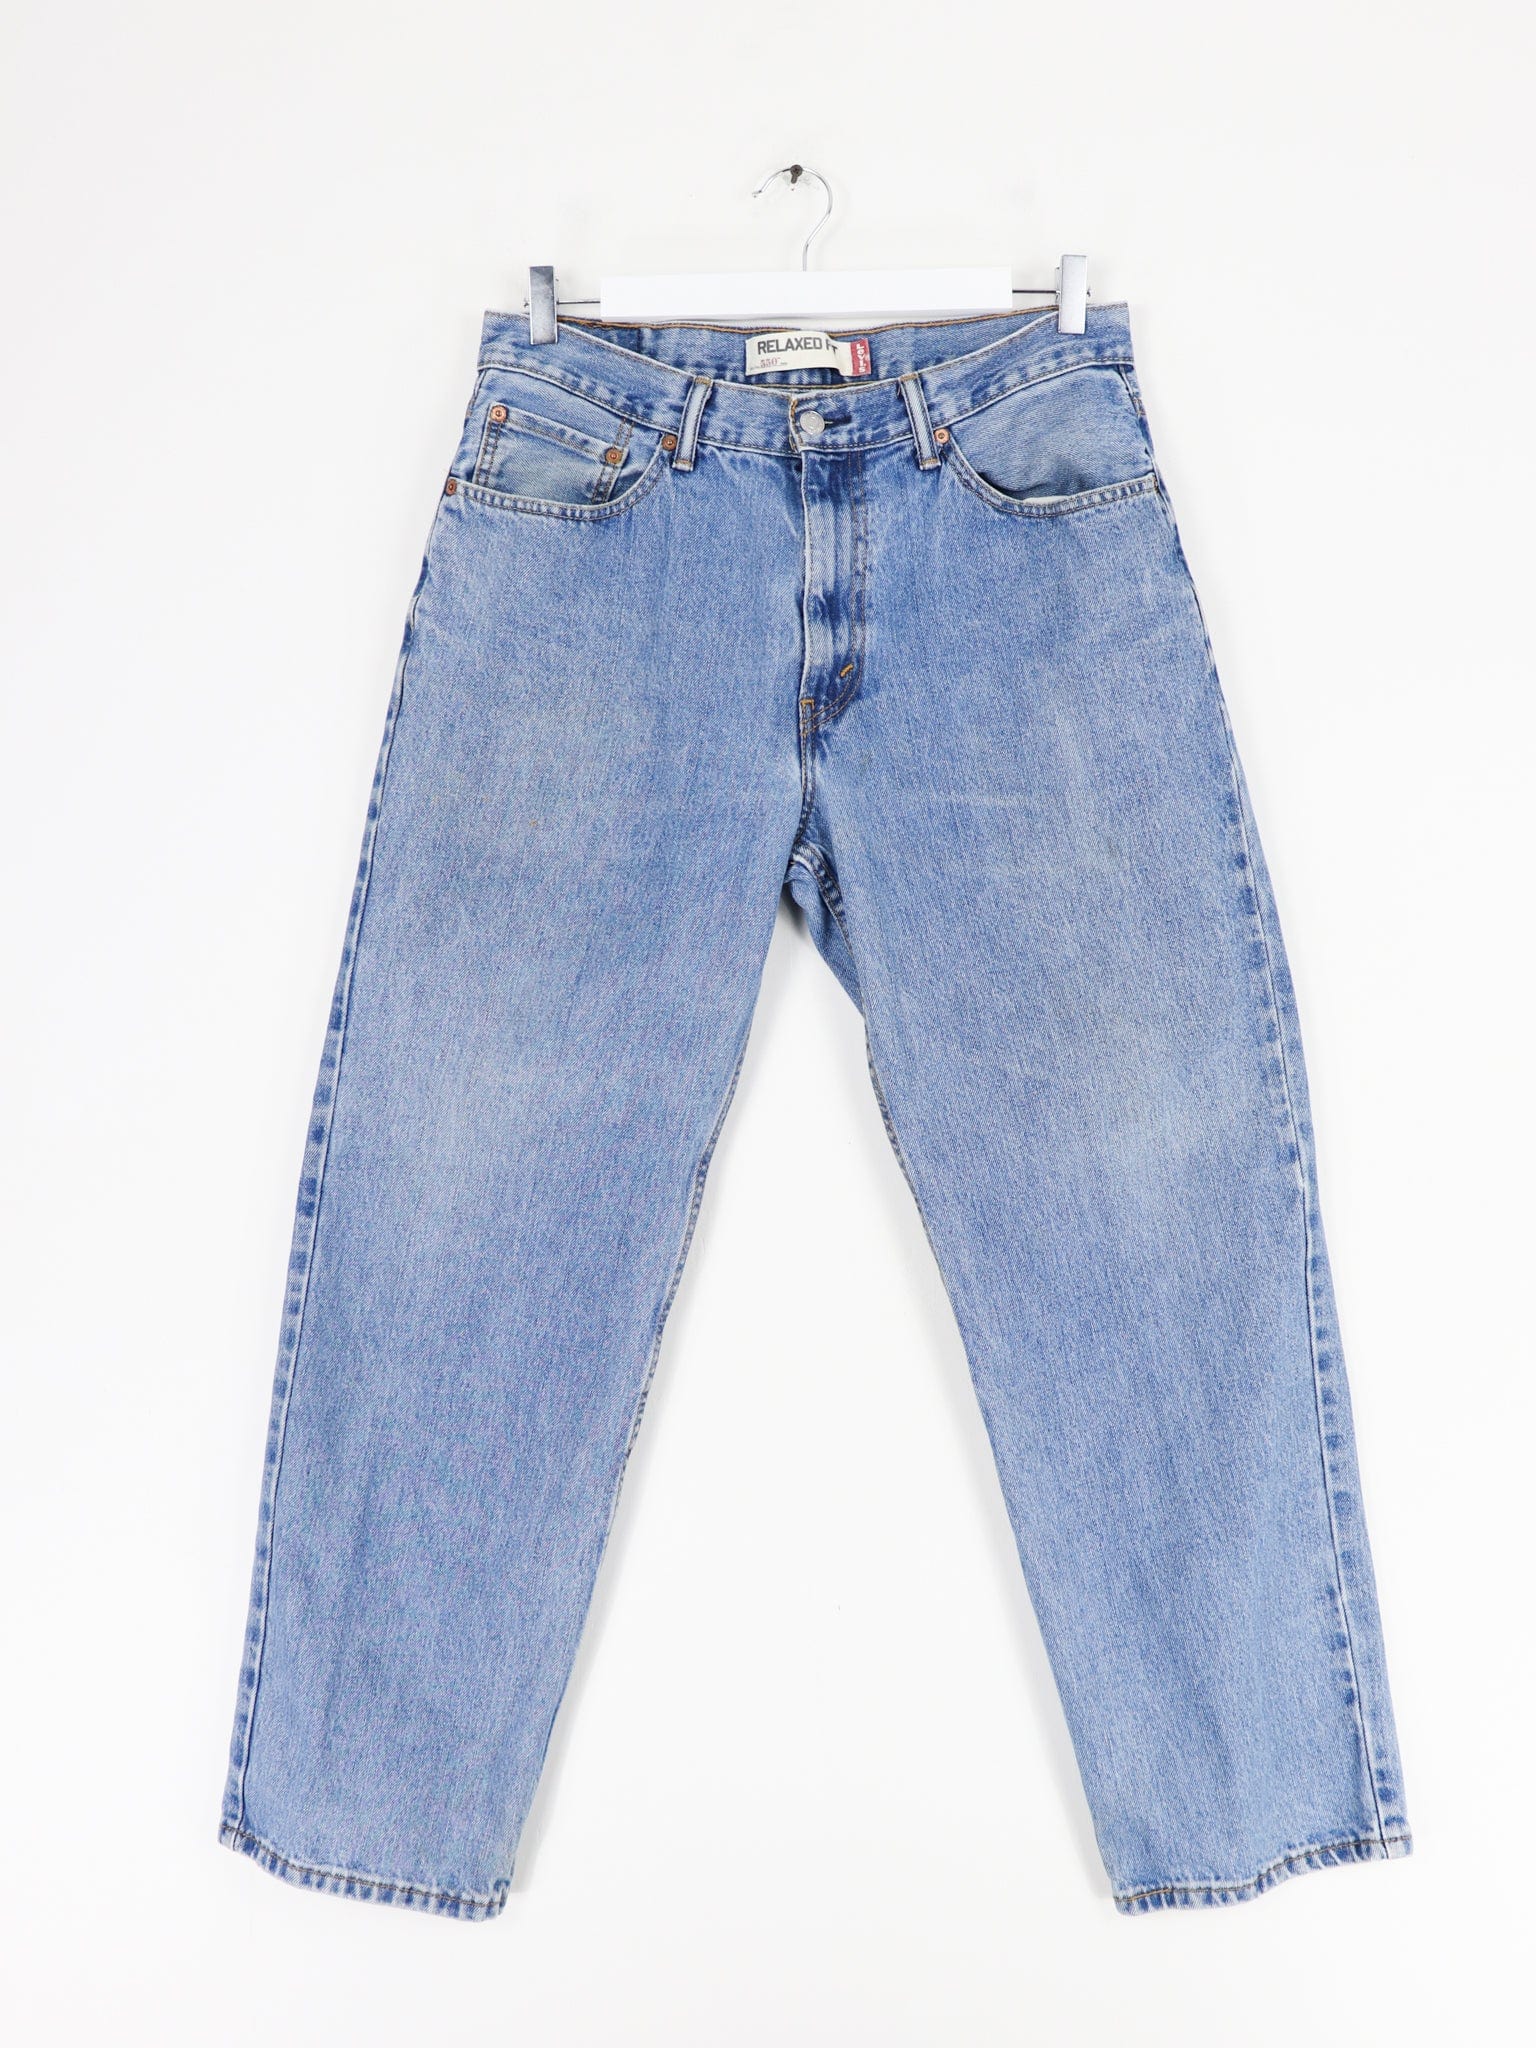 Vintage Levi's 550 Relaxed Fit Denim Jeans Size 33 x 30